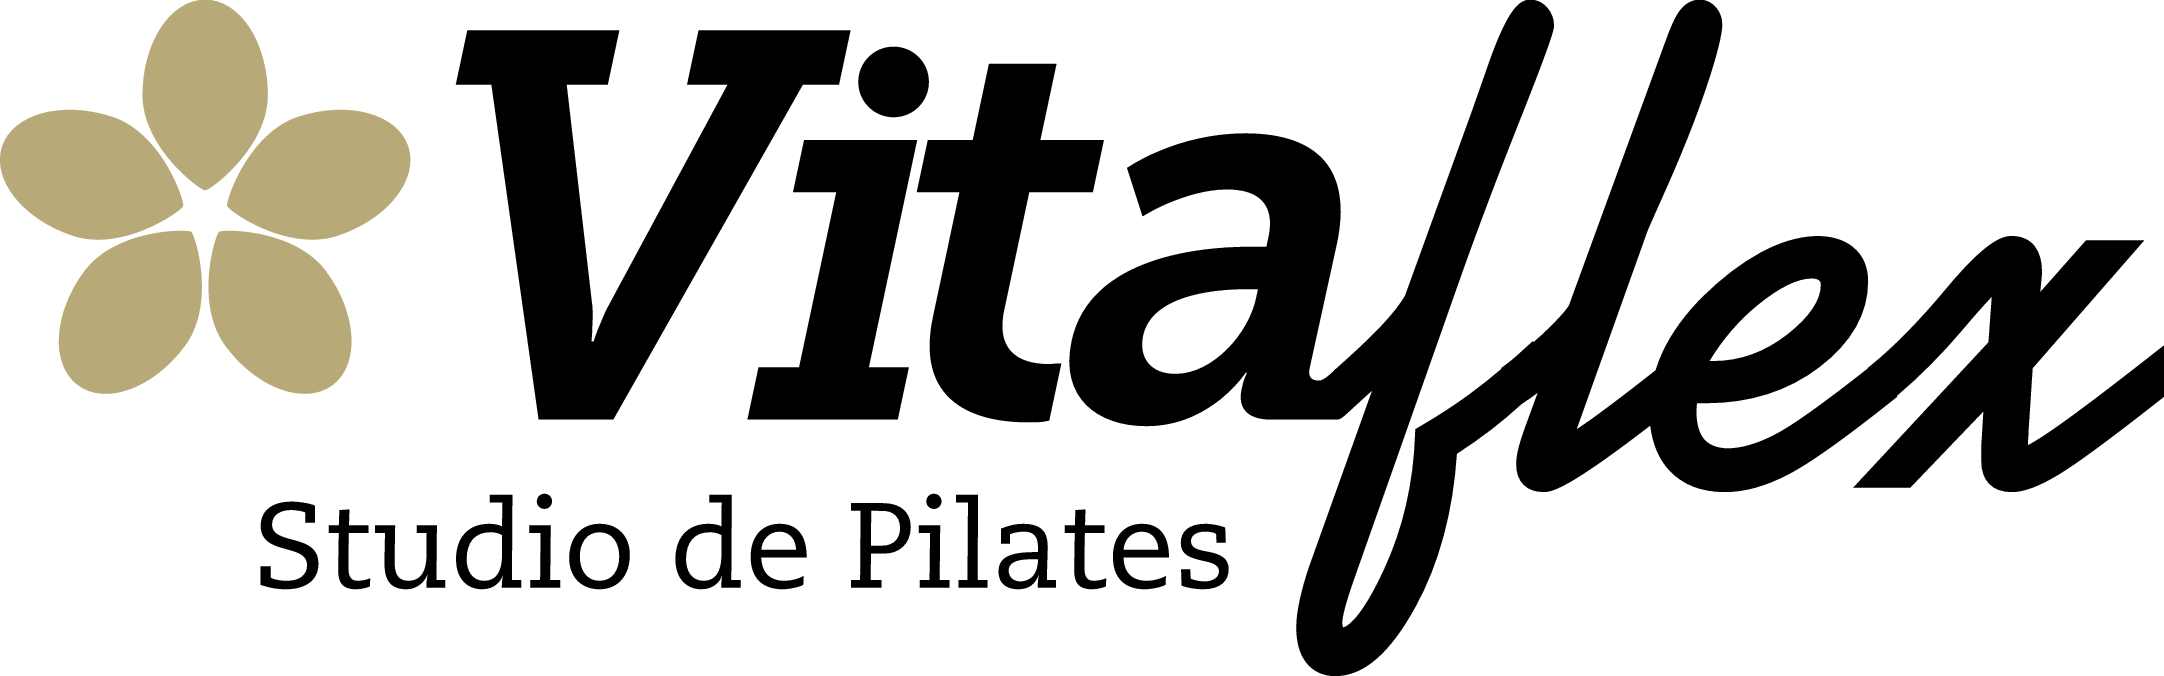 VITAFLEX STUDIO DE PILATES - Pilates - Rio de Janeiro, RJ